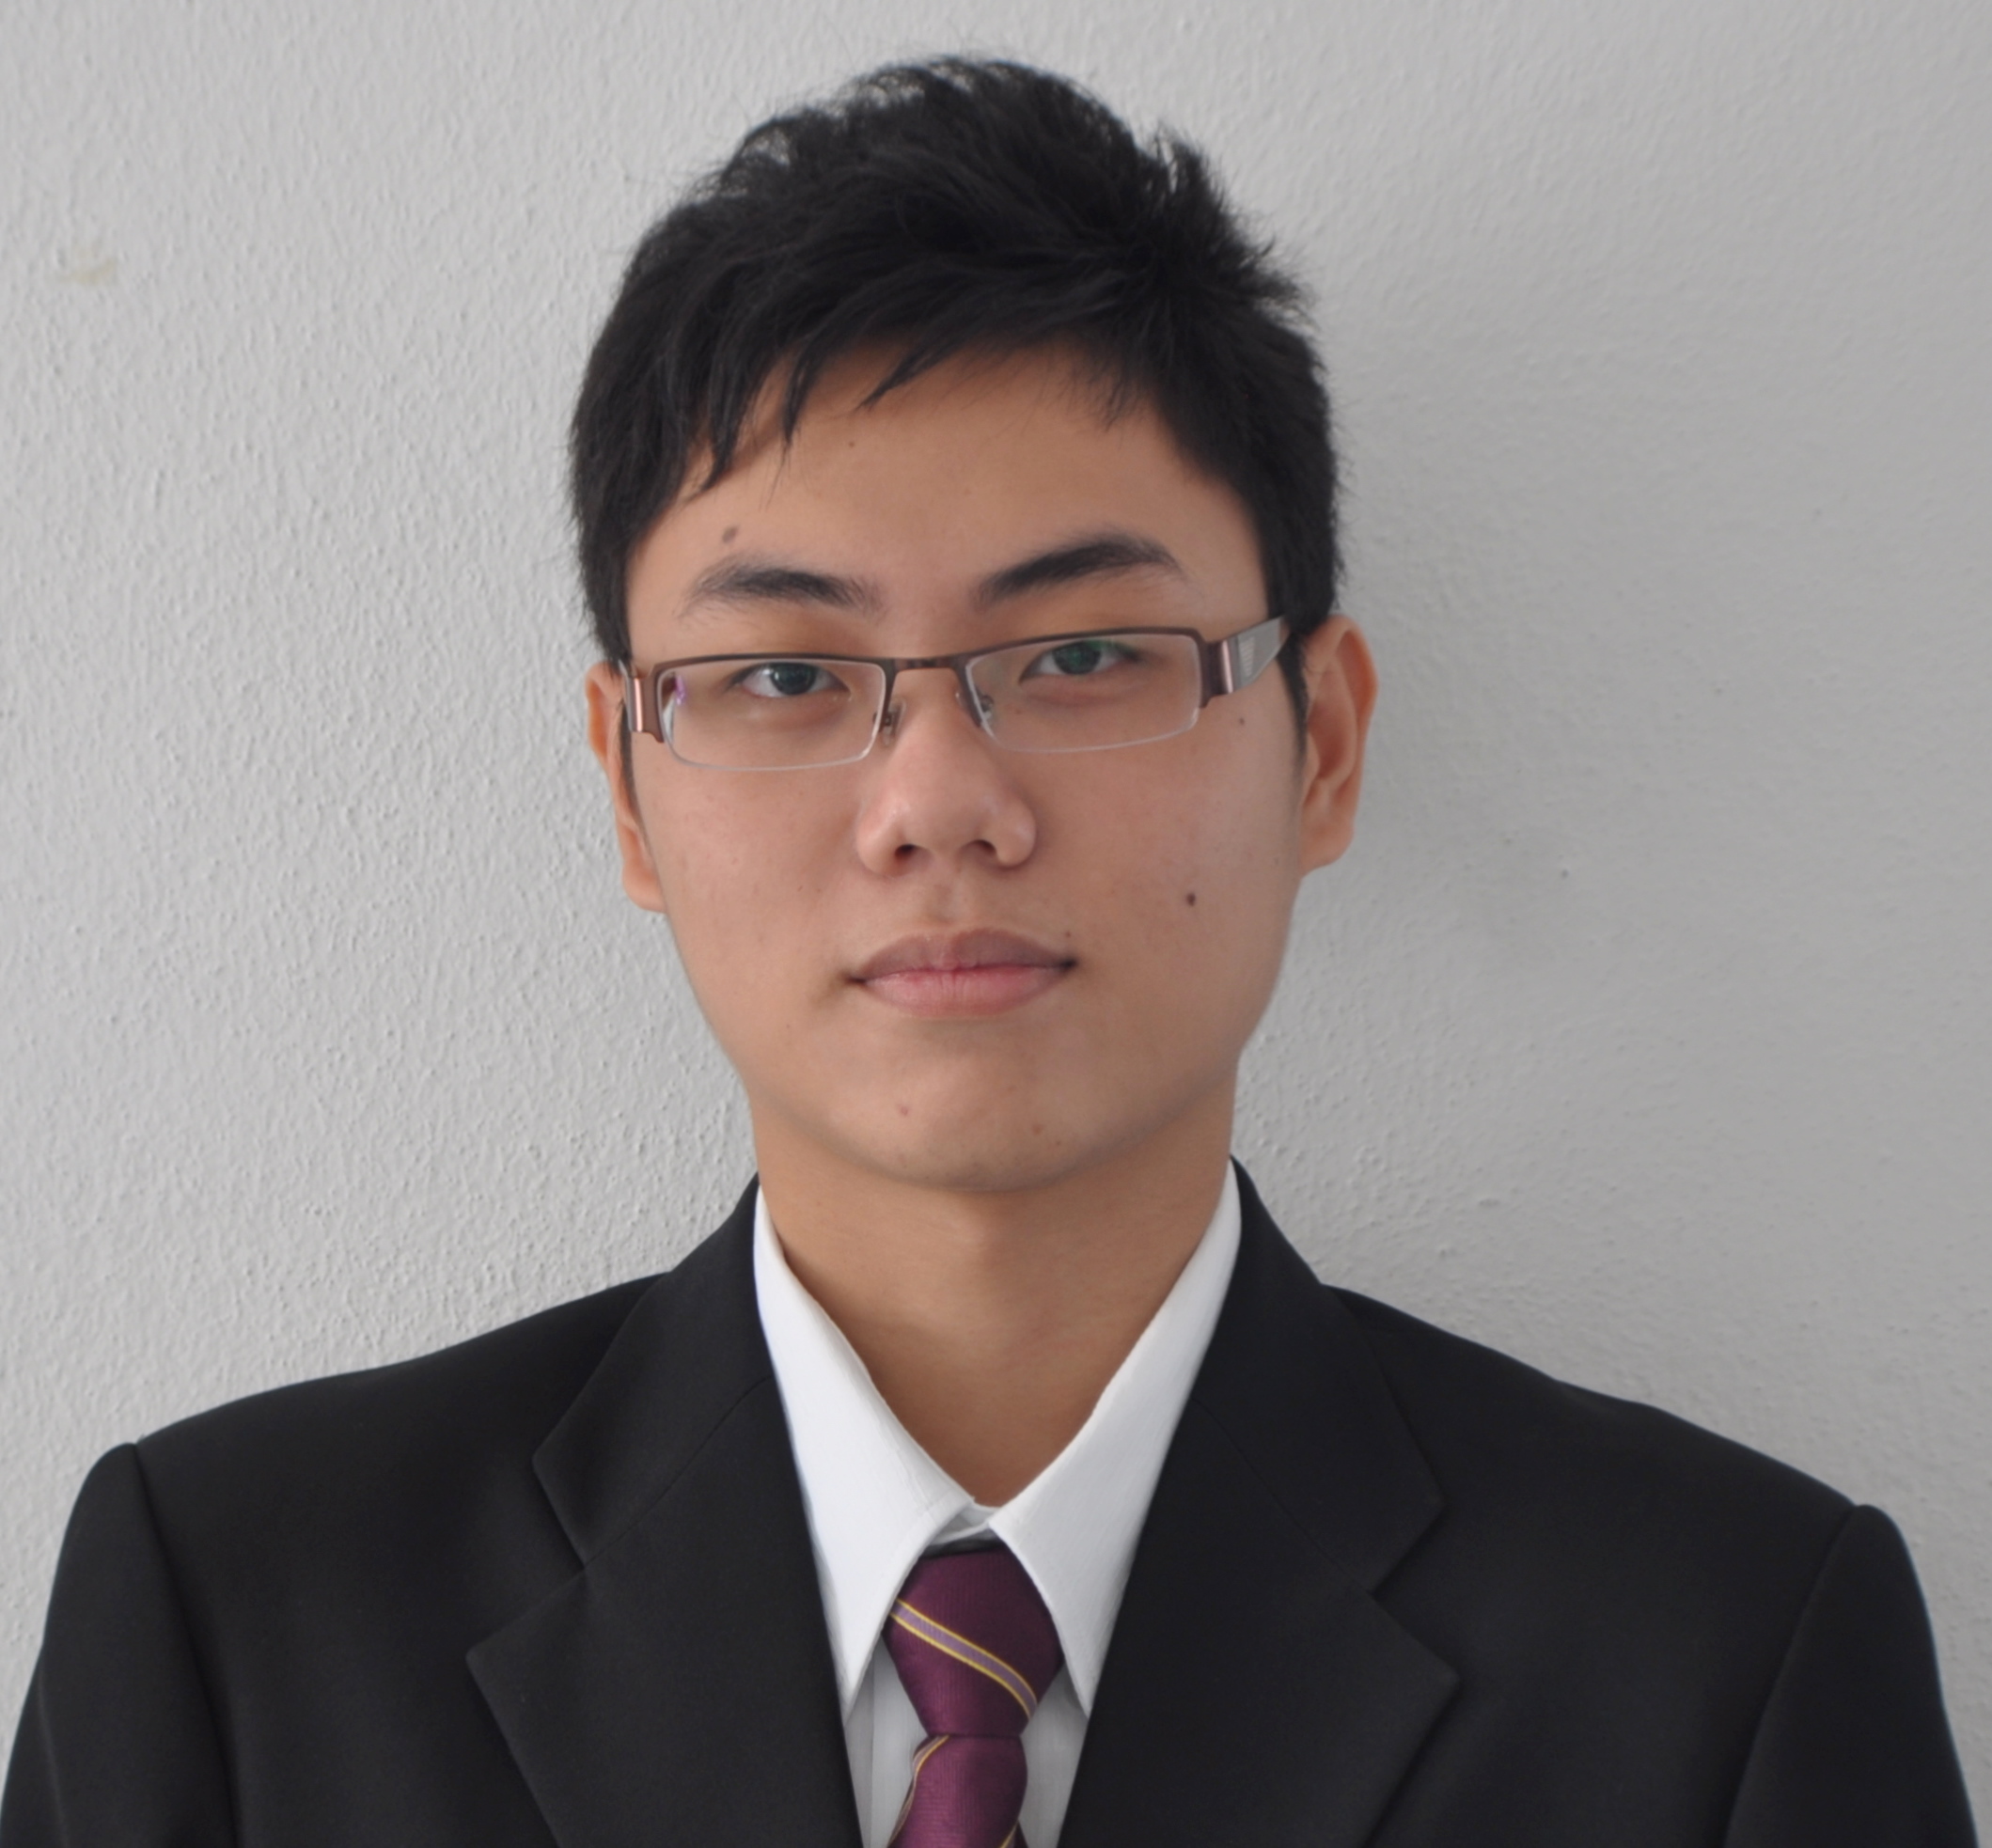 I am Liong Yong Chang, 3rd year student of Universiti Sains Malaysia, majoring urban and regional planning. - e6a281e6b0b8e6988ce5908ce5ada6